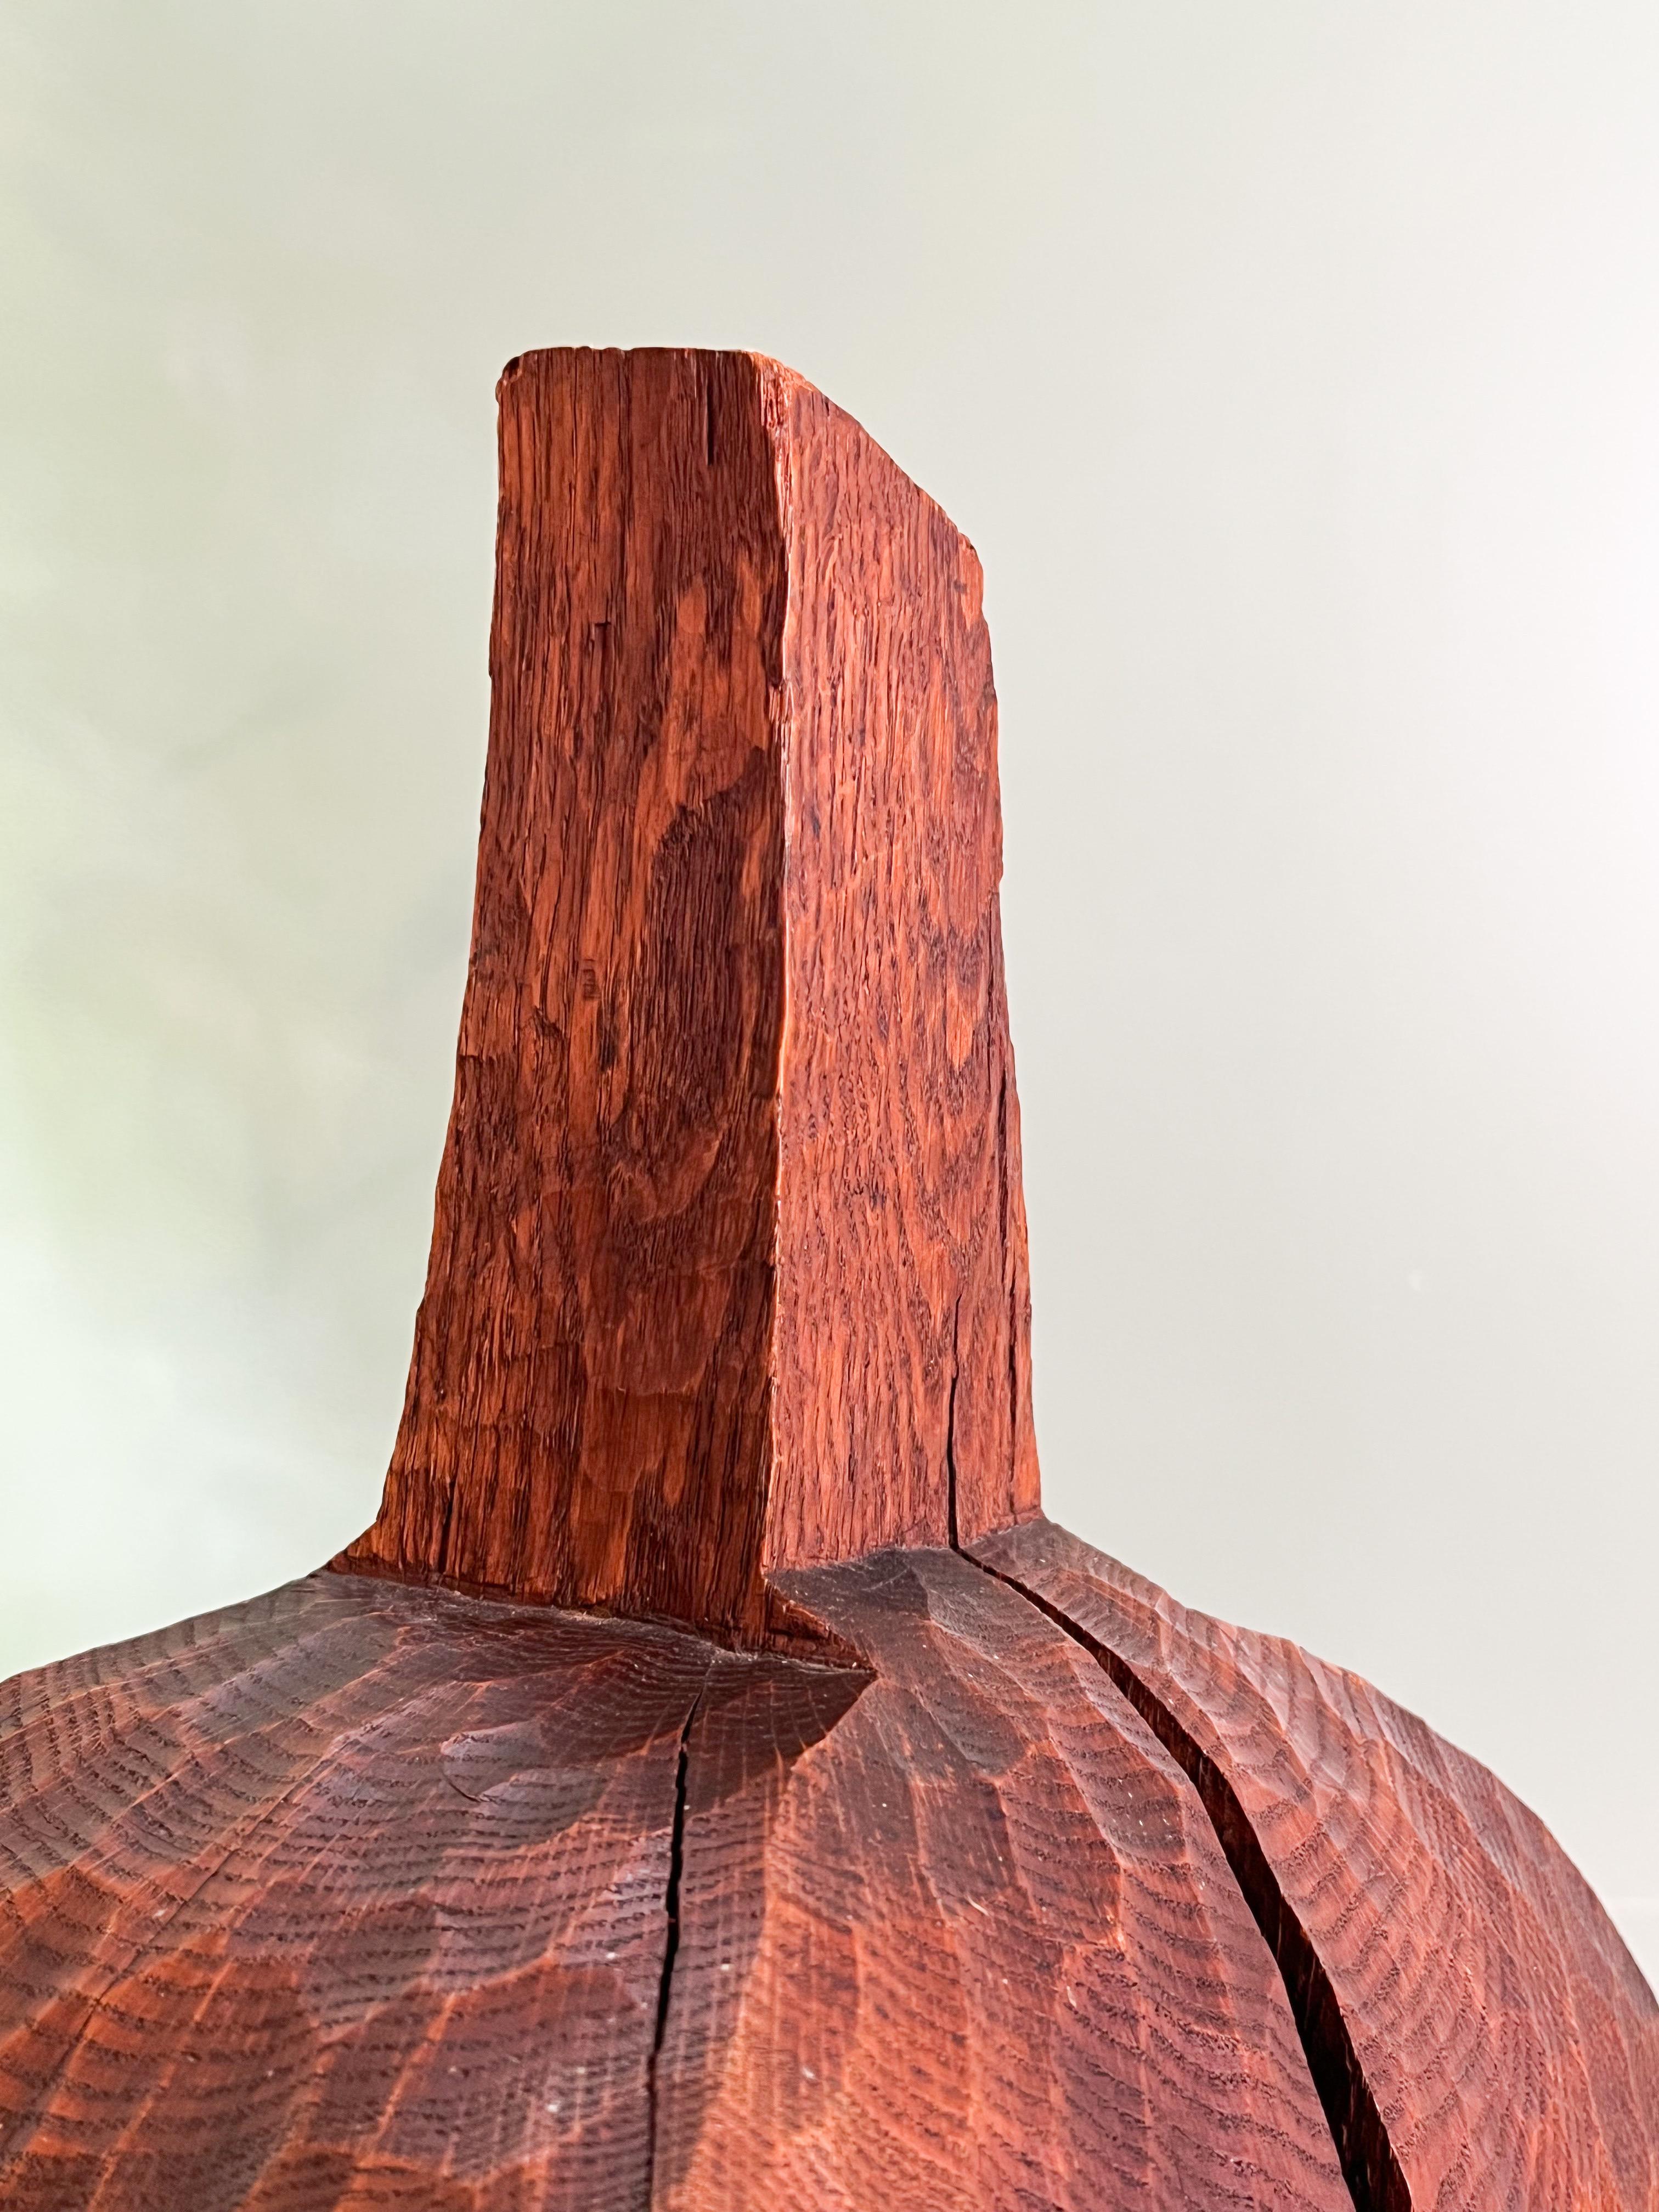 Chiseled Oak Sculpture by Hugh Townley For Sale 8